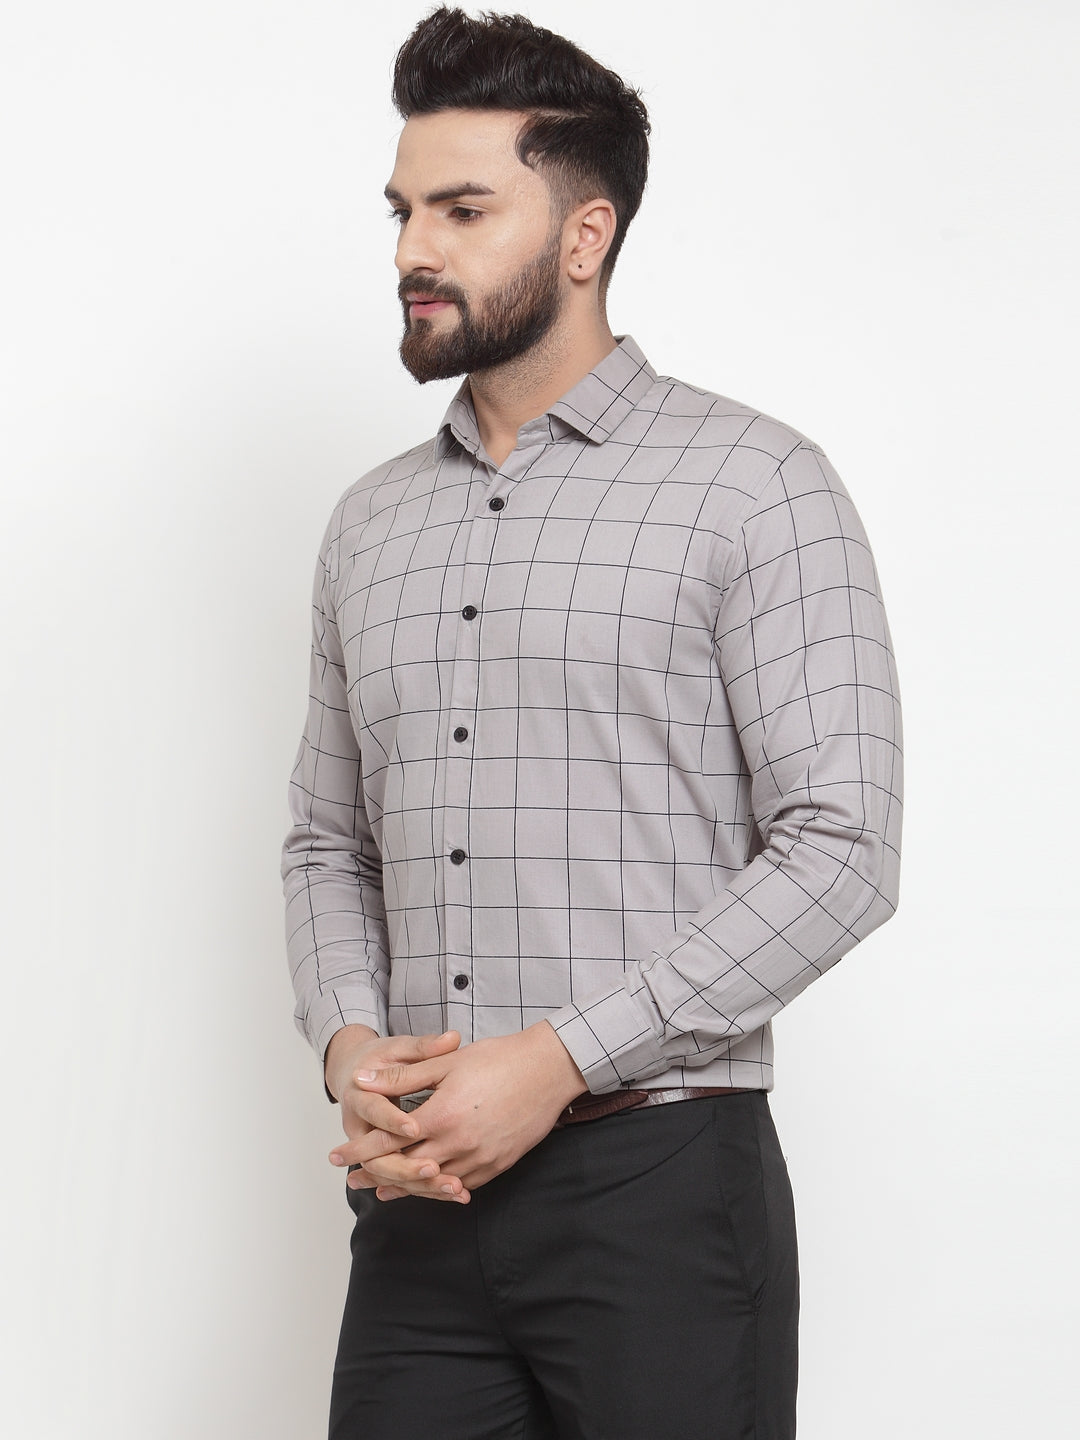 Men's Grey Cotton Checked Formal Shirts ( SF 742Grey ) - Jainish